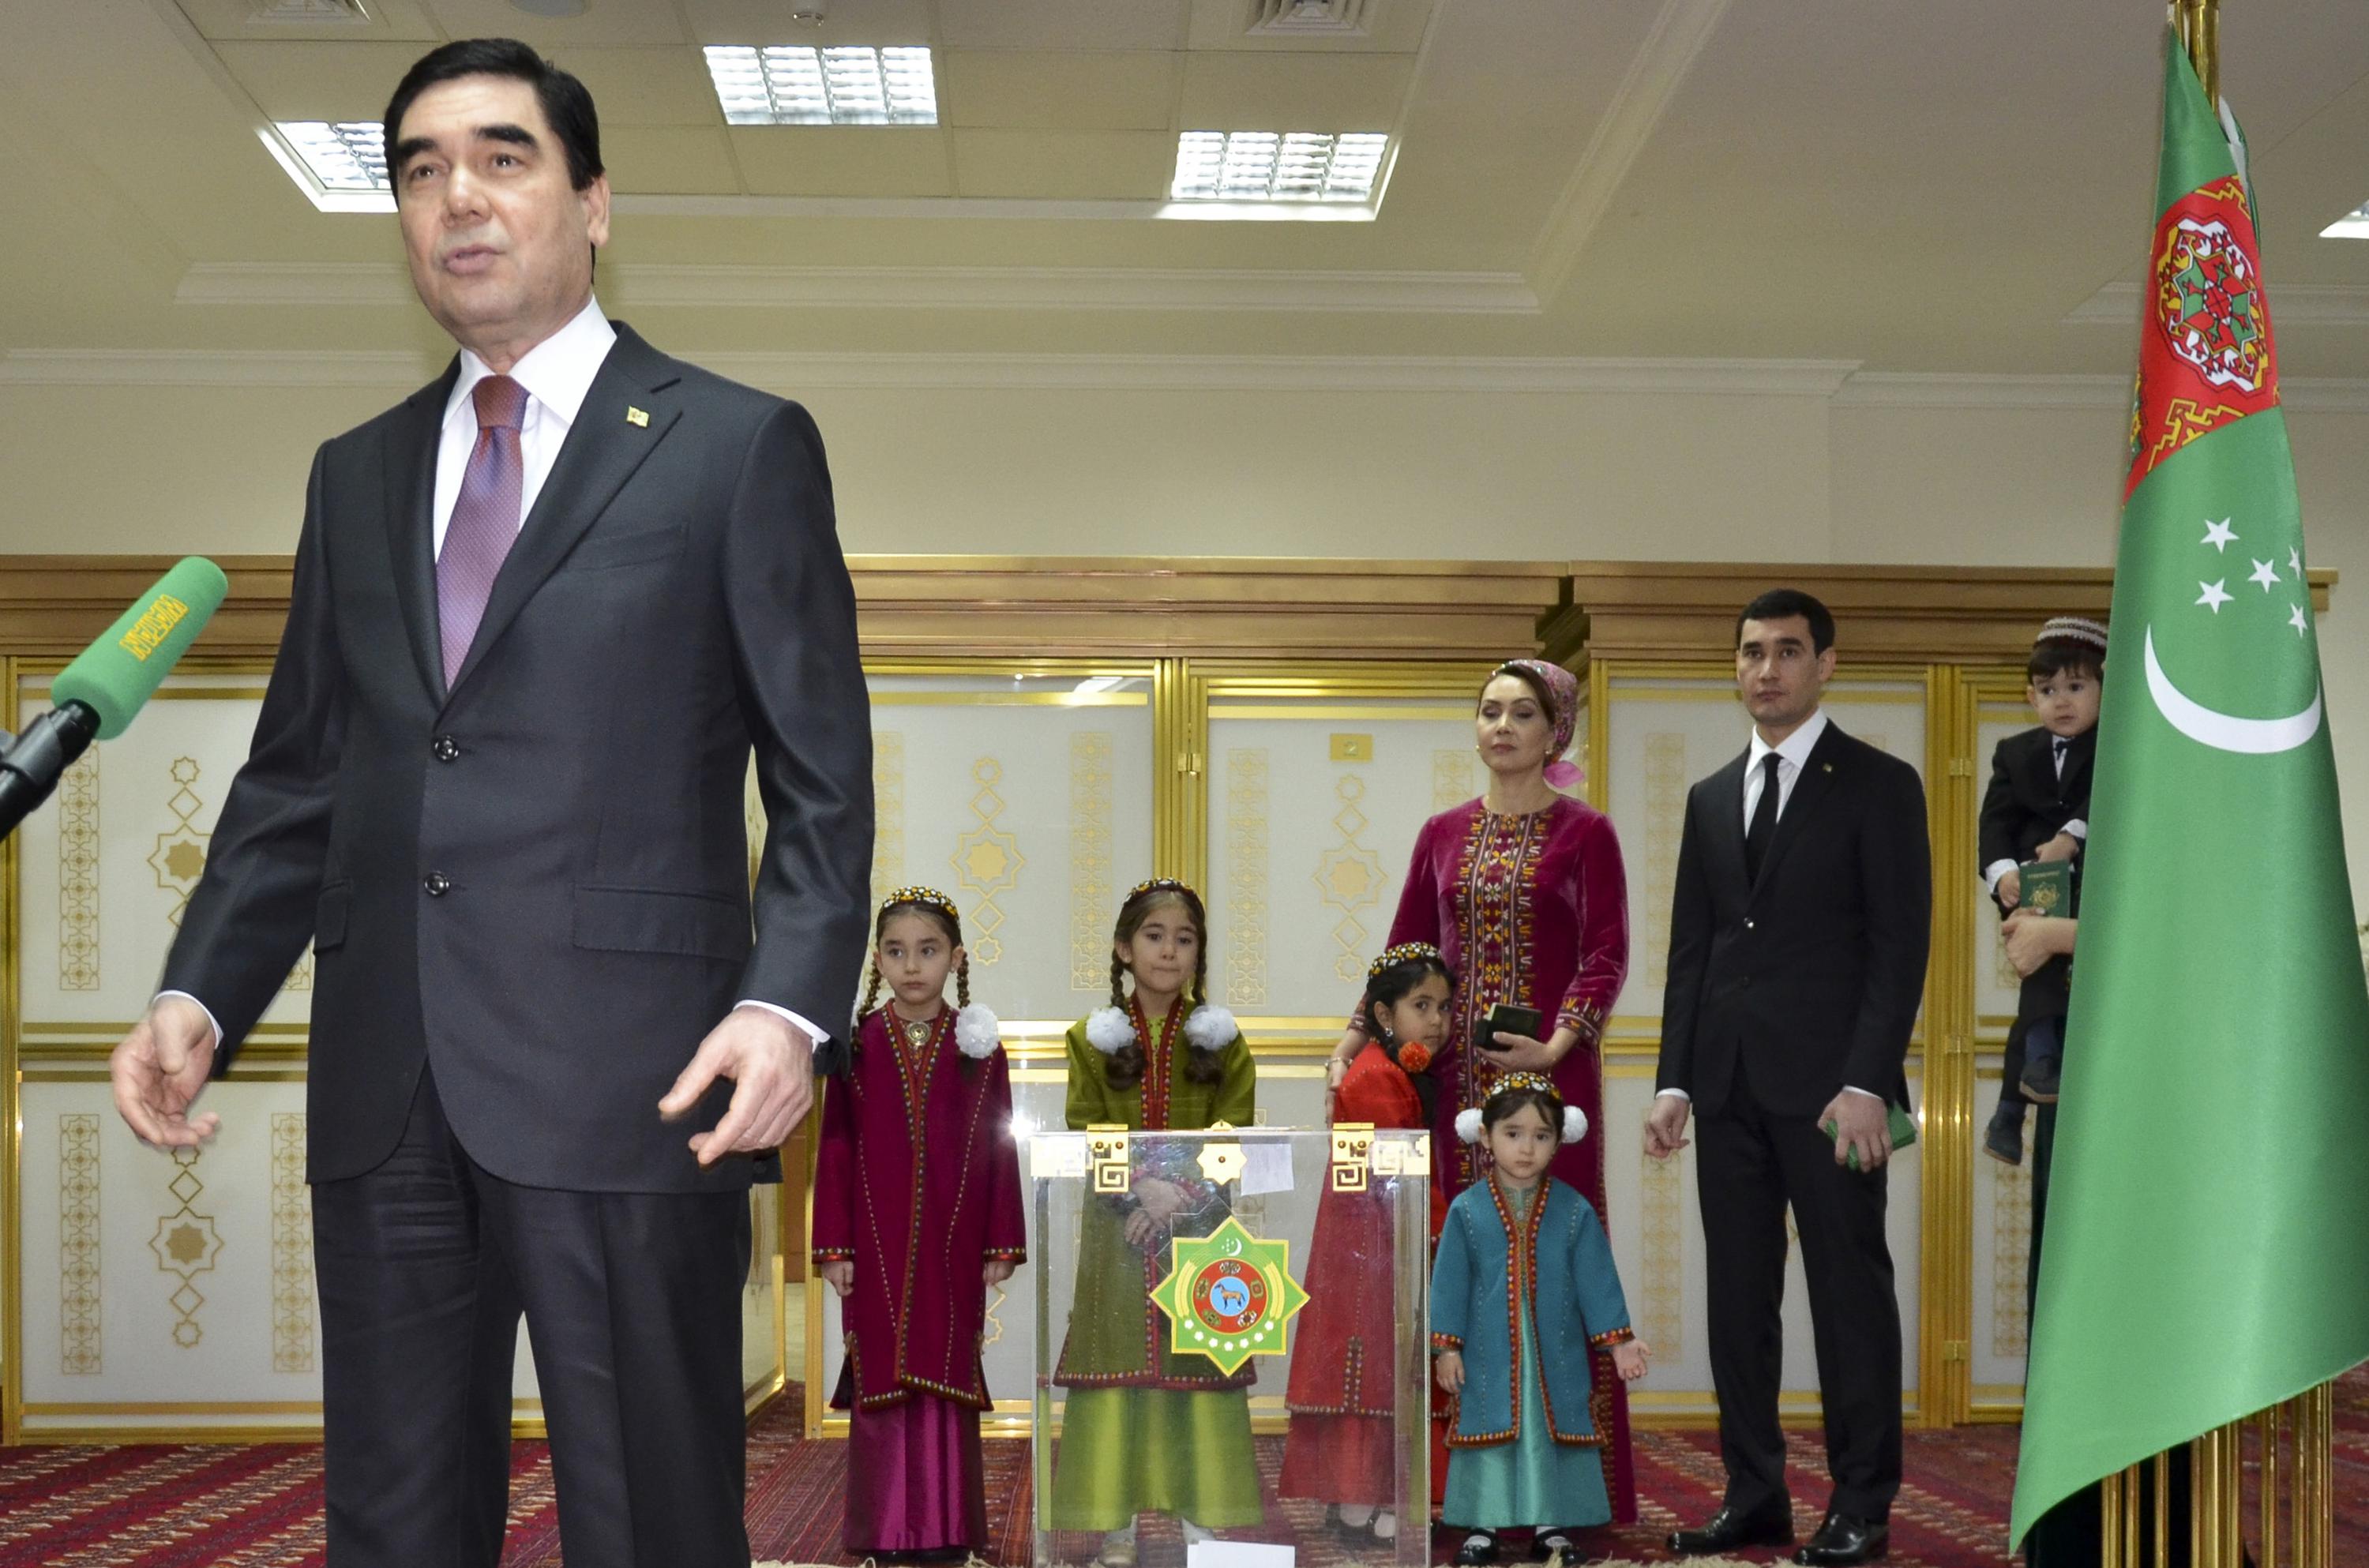 Turkmenistan leader's son wins presidential election